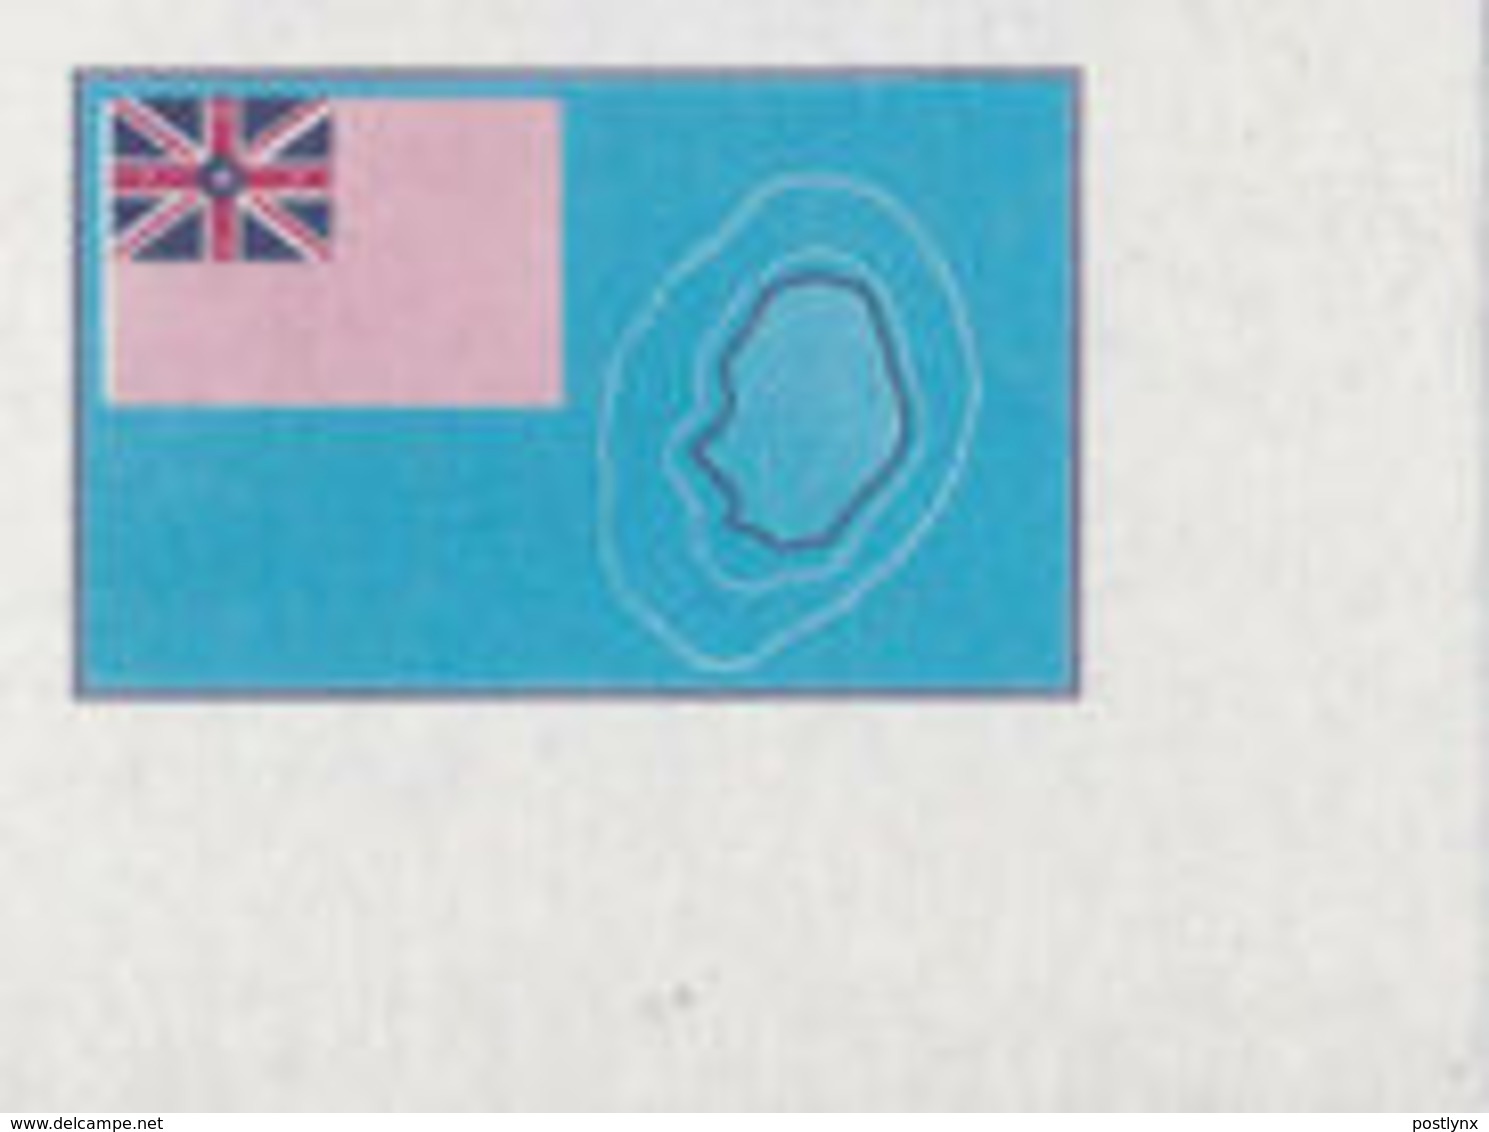 TUVALU 1986 Niue Flag Map Islands 40c CORNER.ERROR:CMY:no Blk. (PROOF) - Isole